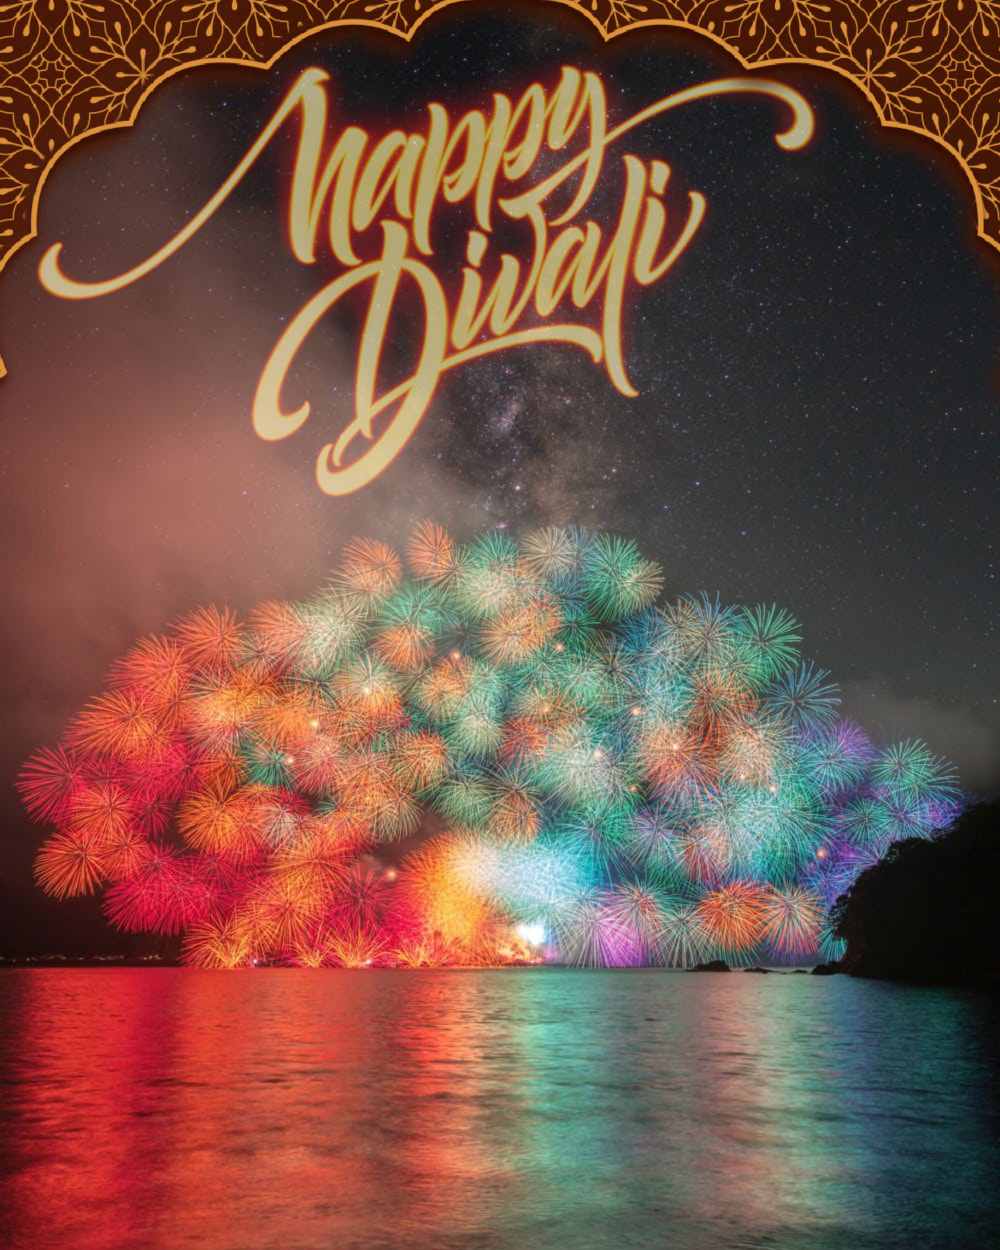 diwali editing backgrounds-New Diwali backgrounds_rajan editz_Happy diwali backgrounds_diwali2021